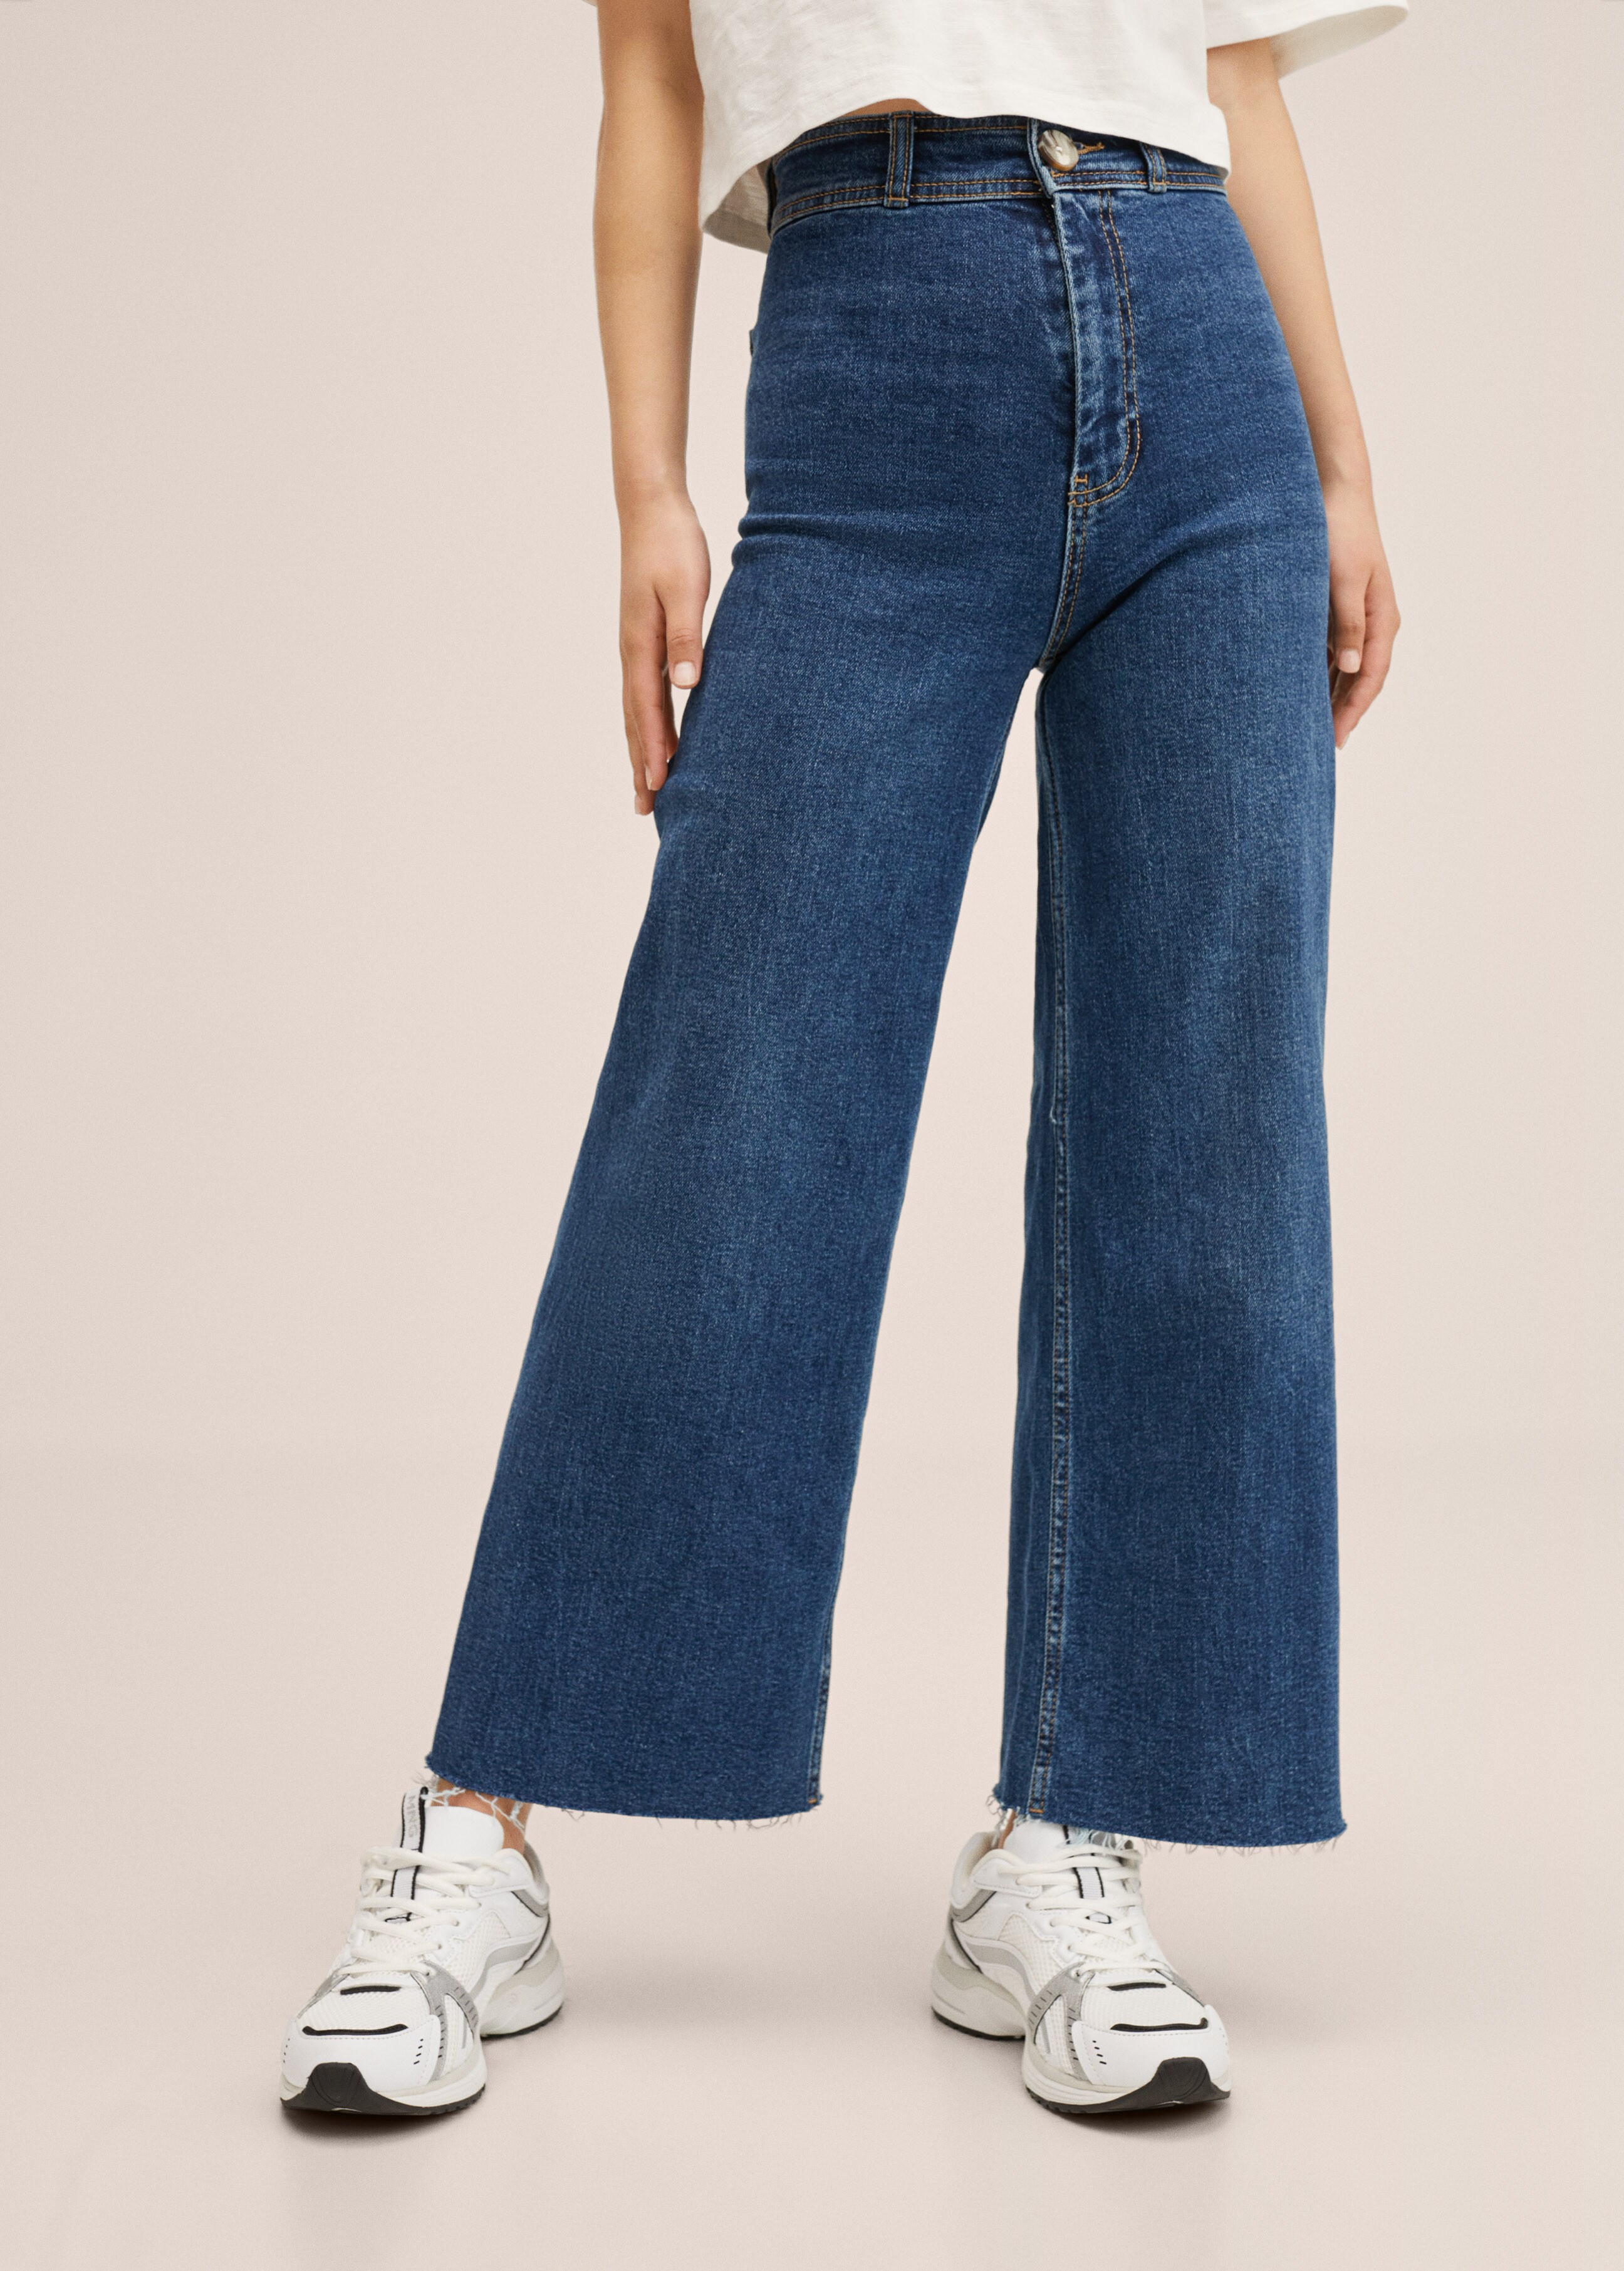 Culotte frayed jeans - Medium plane